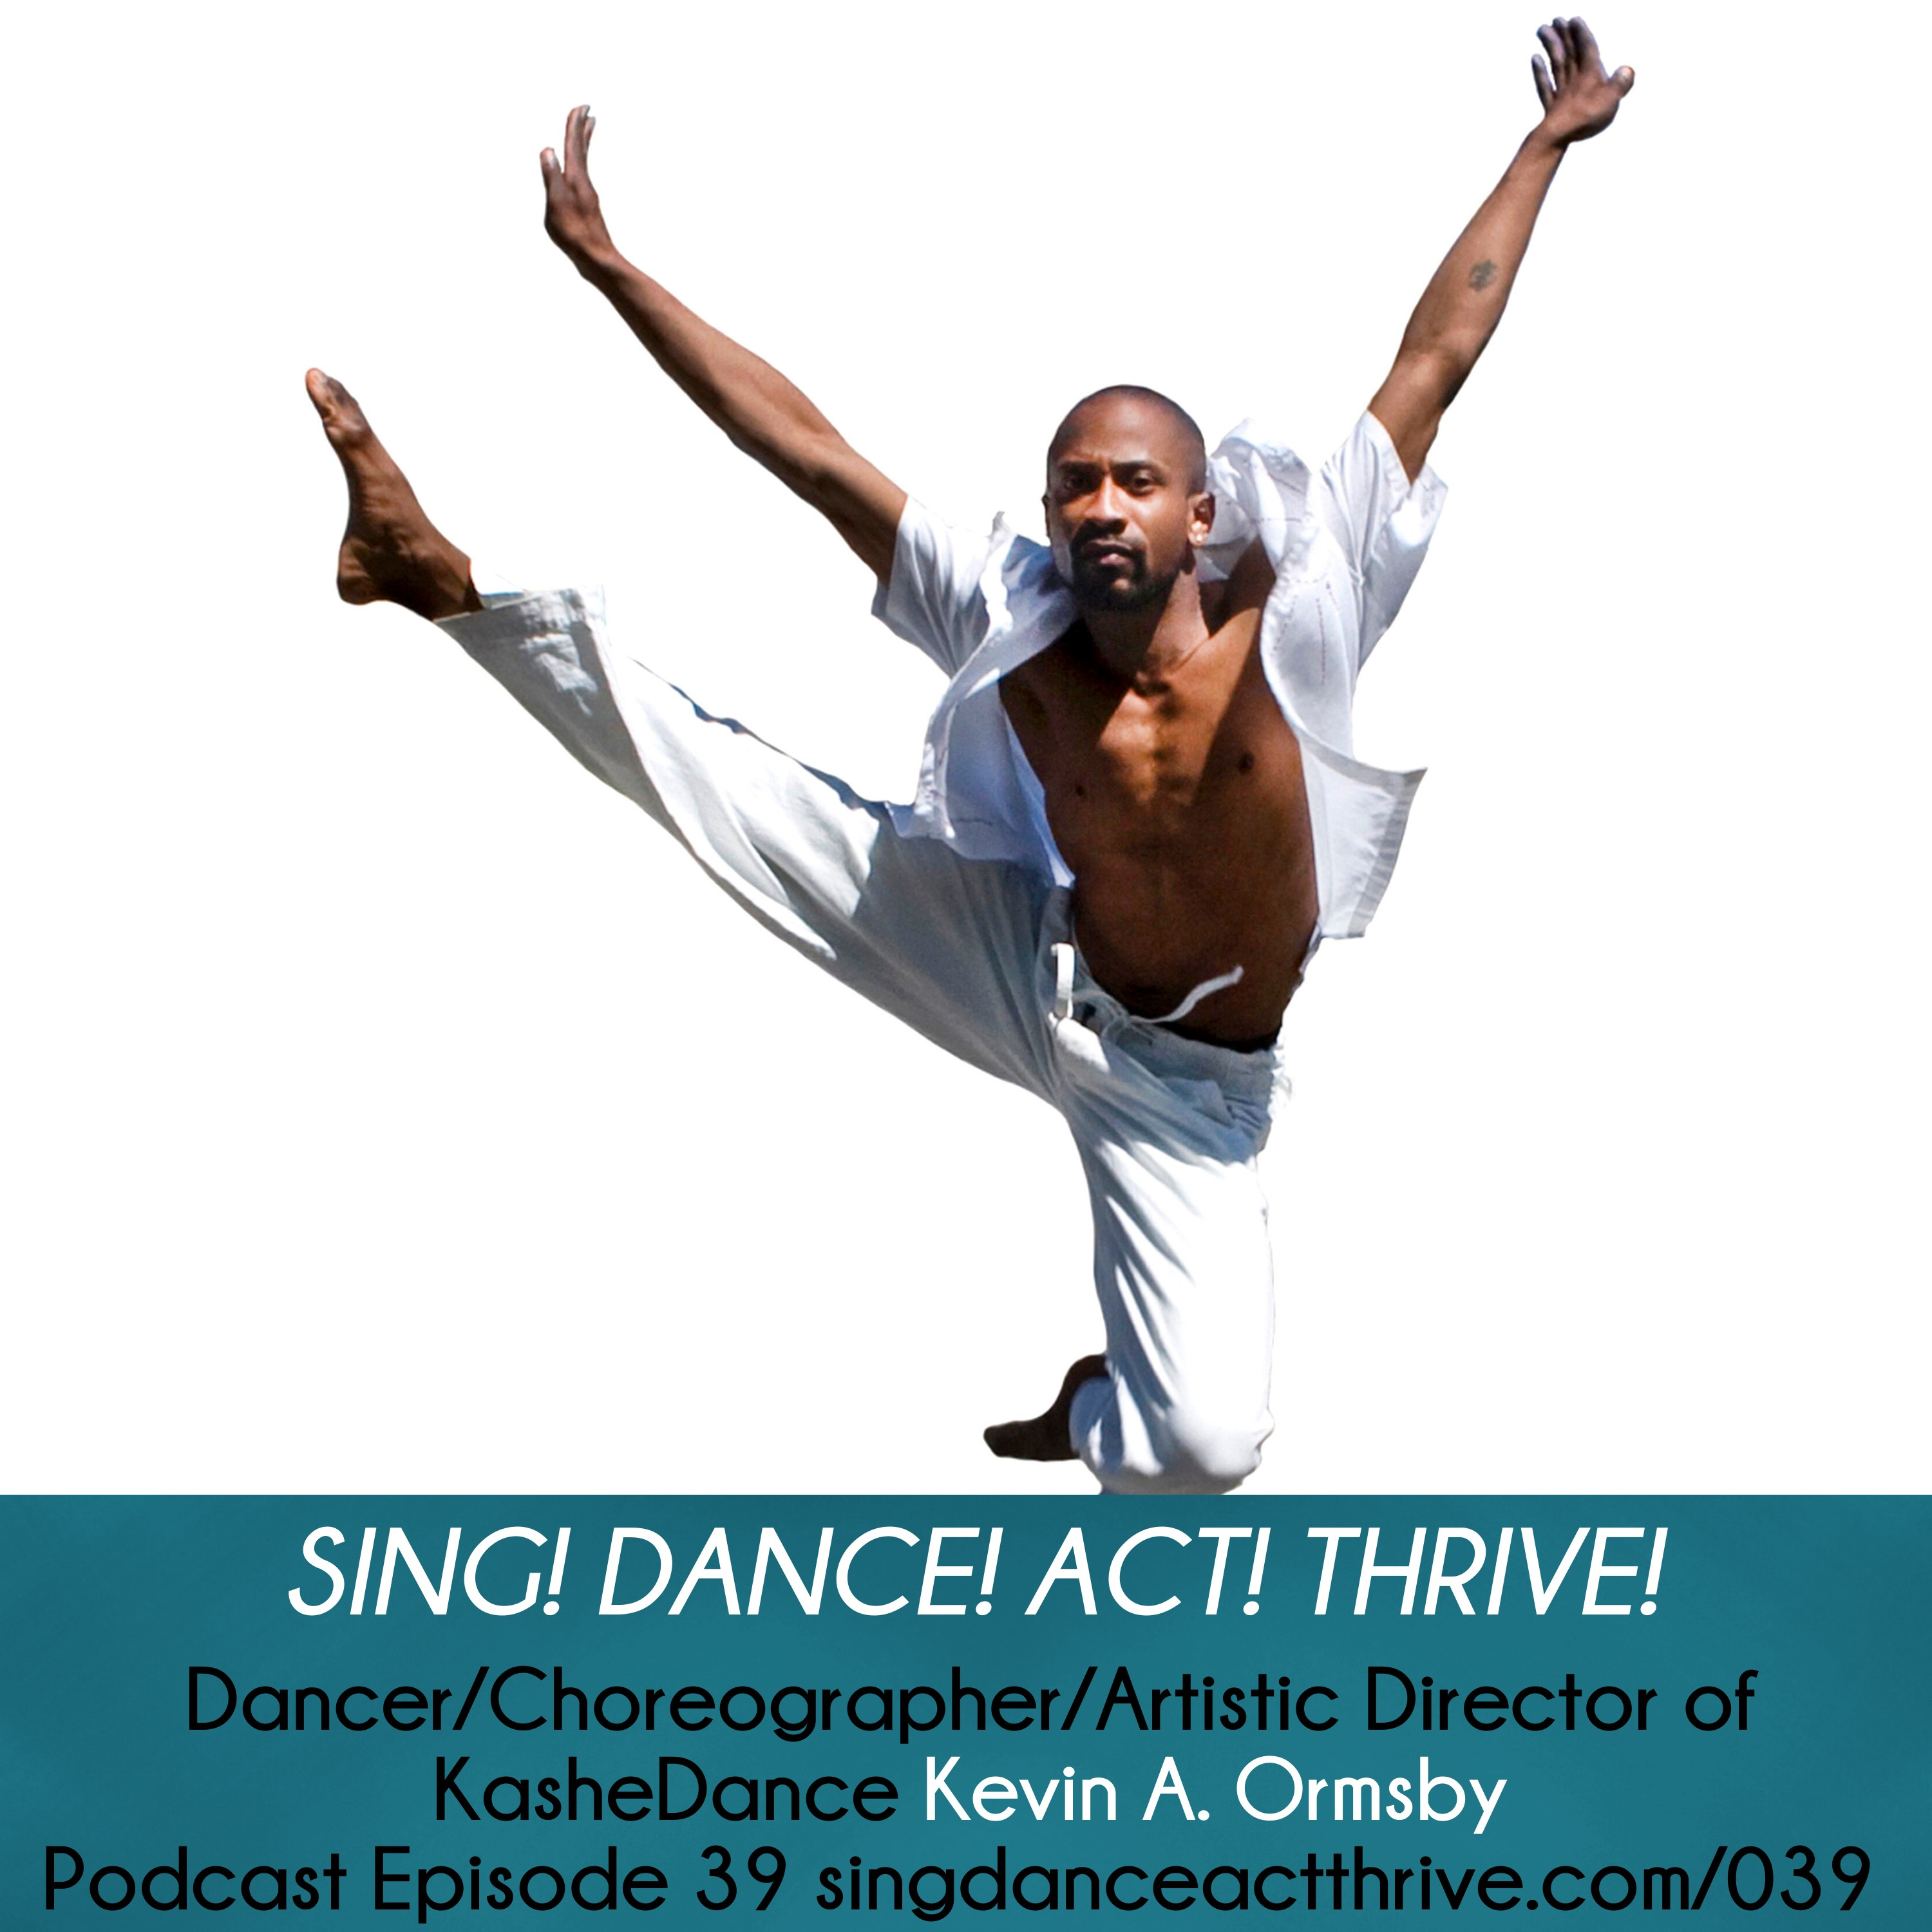 Kevin A. Ormsby: Dancer, Choreographer, Artistic Director of KasheDance hero artwork